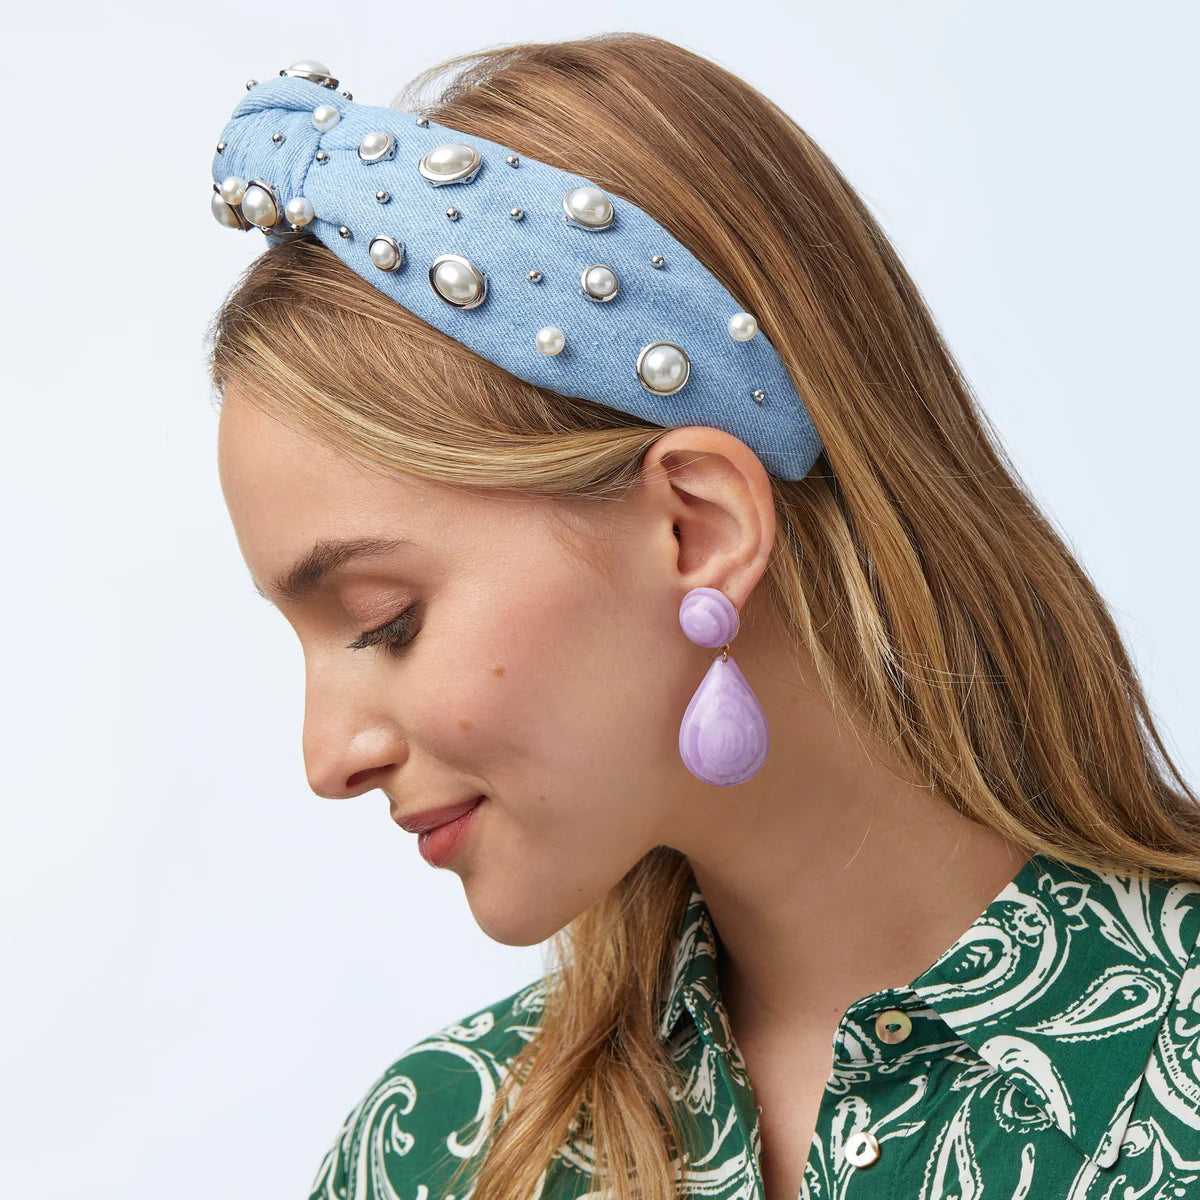 Lele Sadoughi Small Dome Teardrop Earrings in Lilac